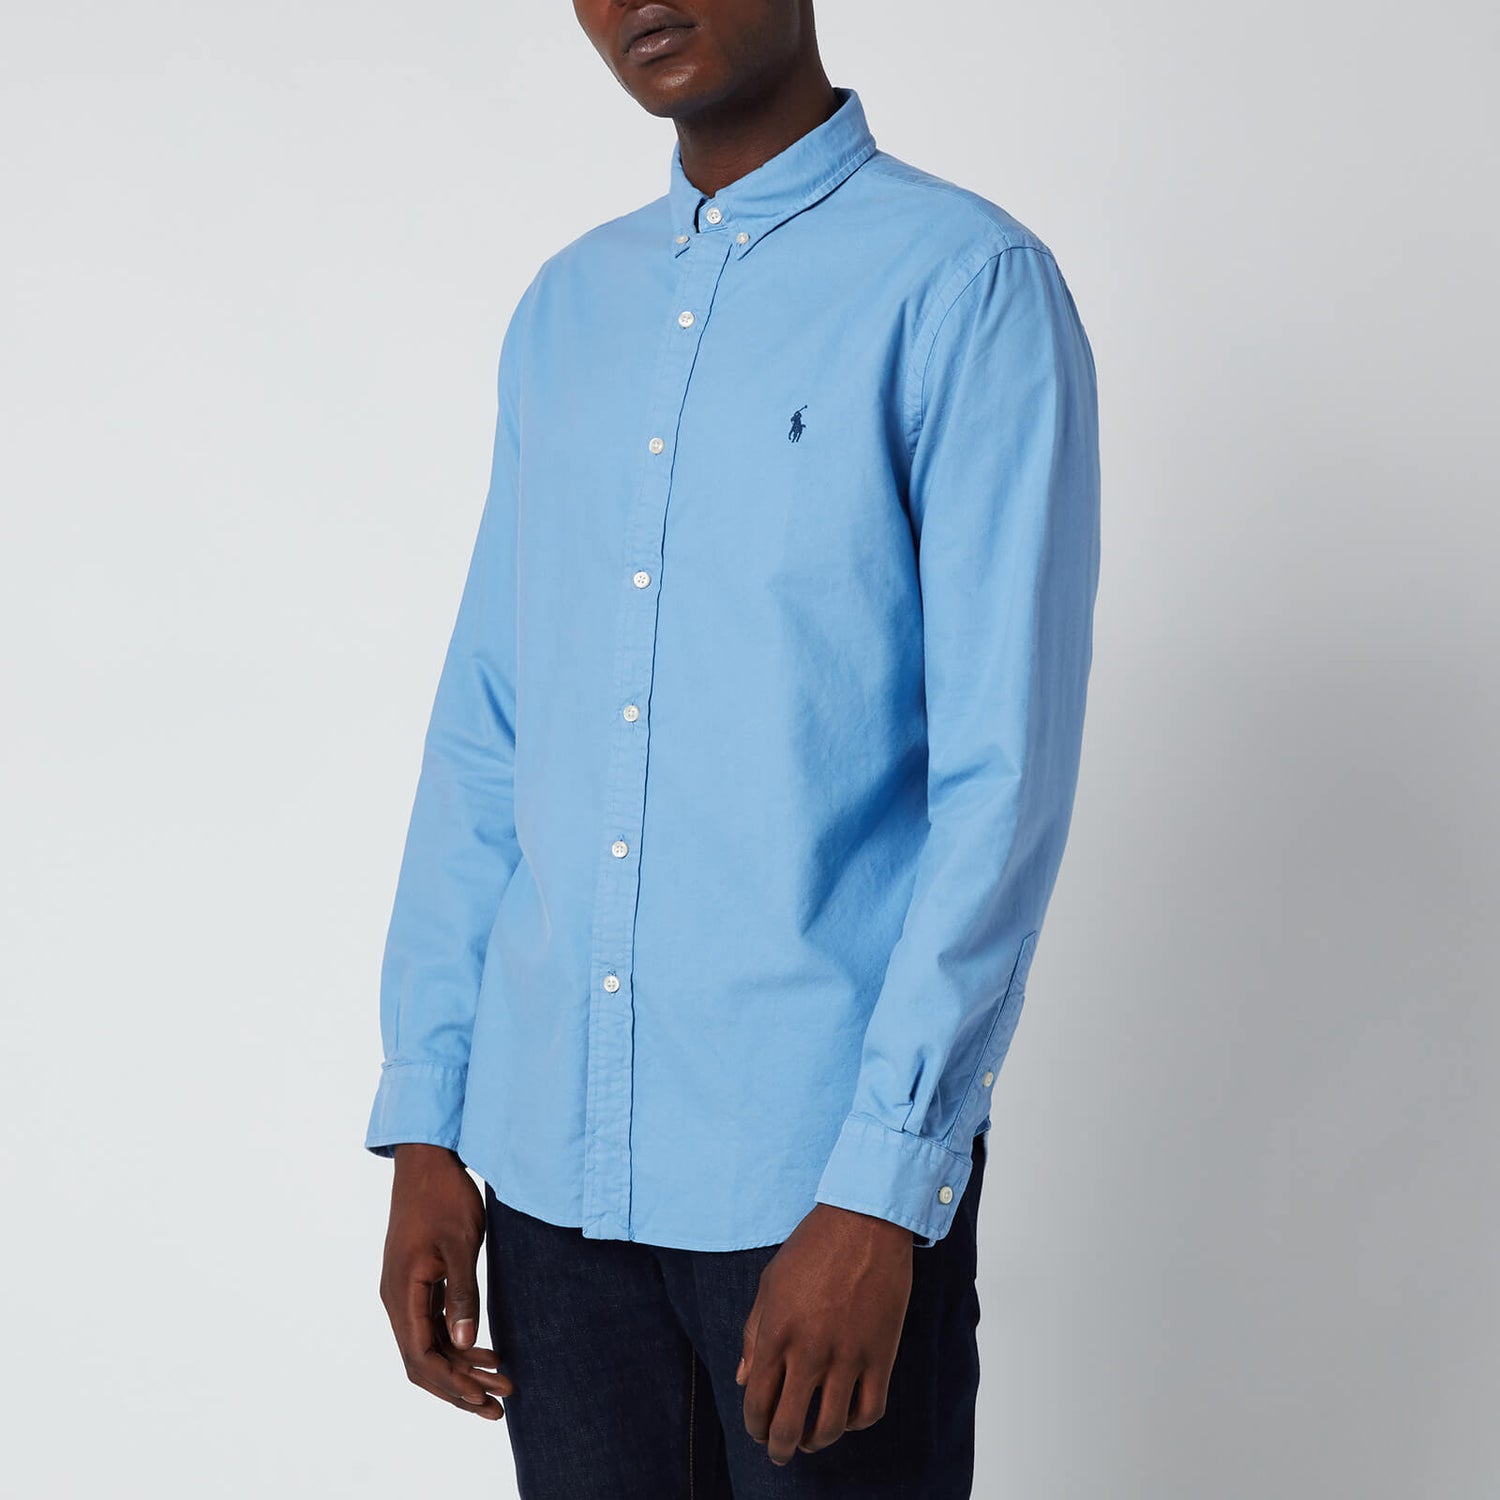 Polo Ralph Lauren Men's Slim Fit Oxford Shirt - Harbor Island Blue - S